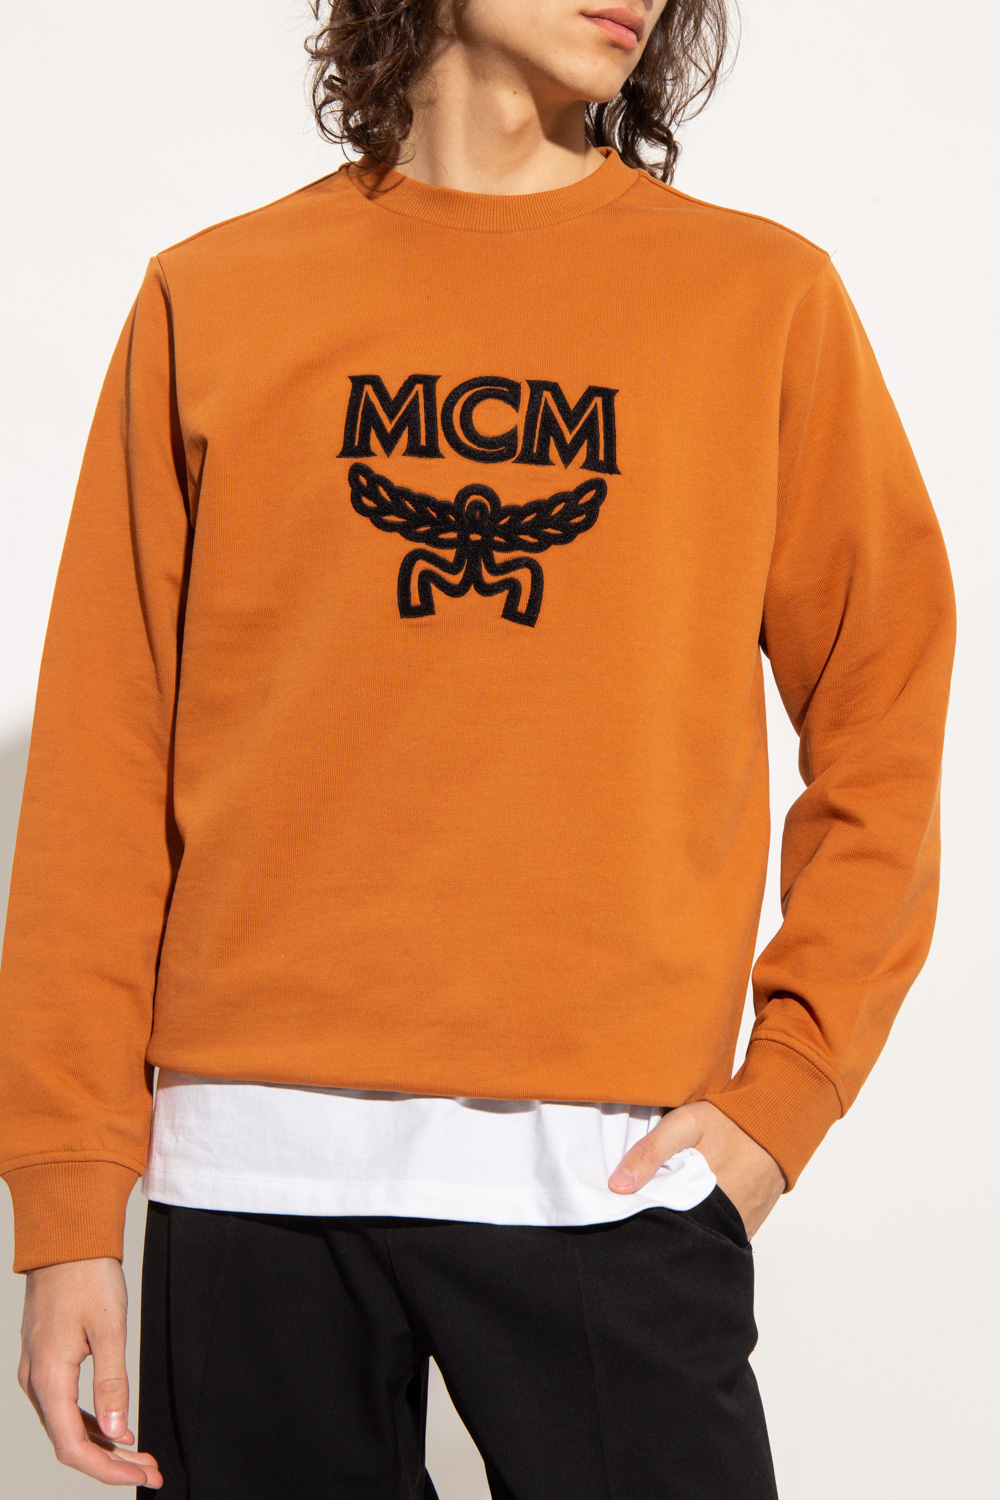 MCM Sweatshirt with logo | Men's Clothing | Vitkac